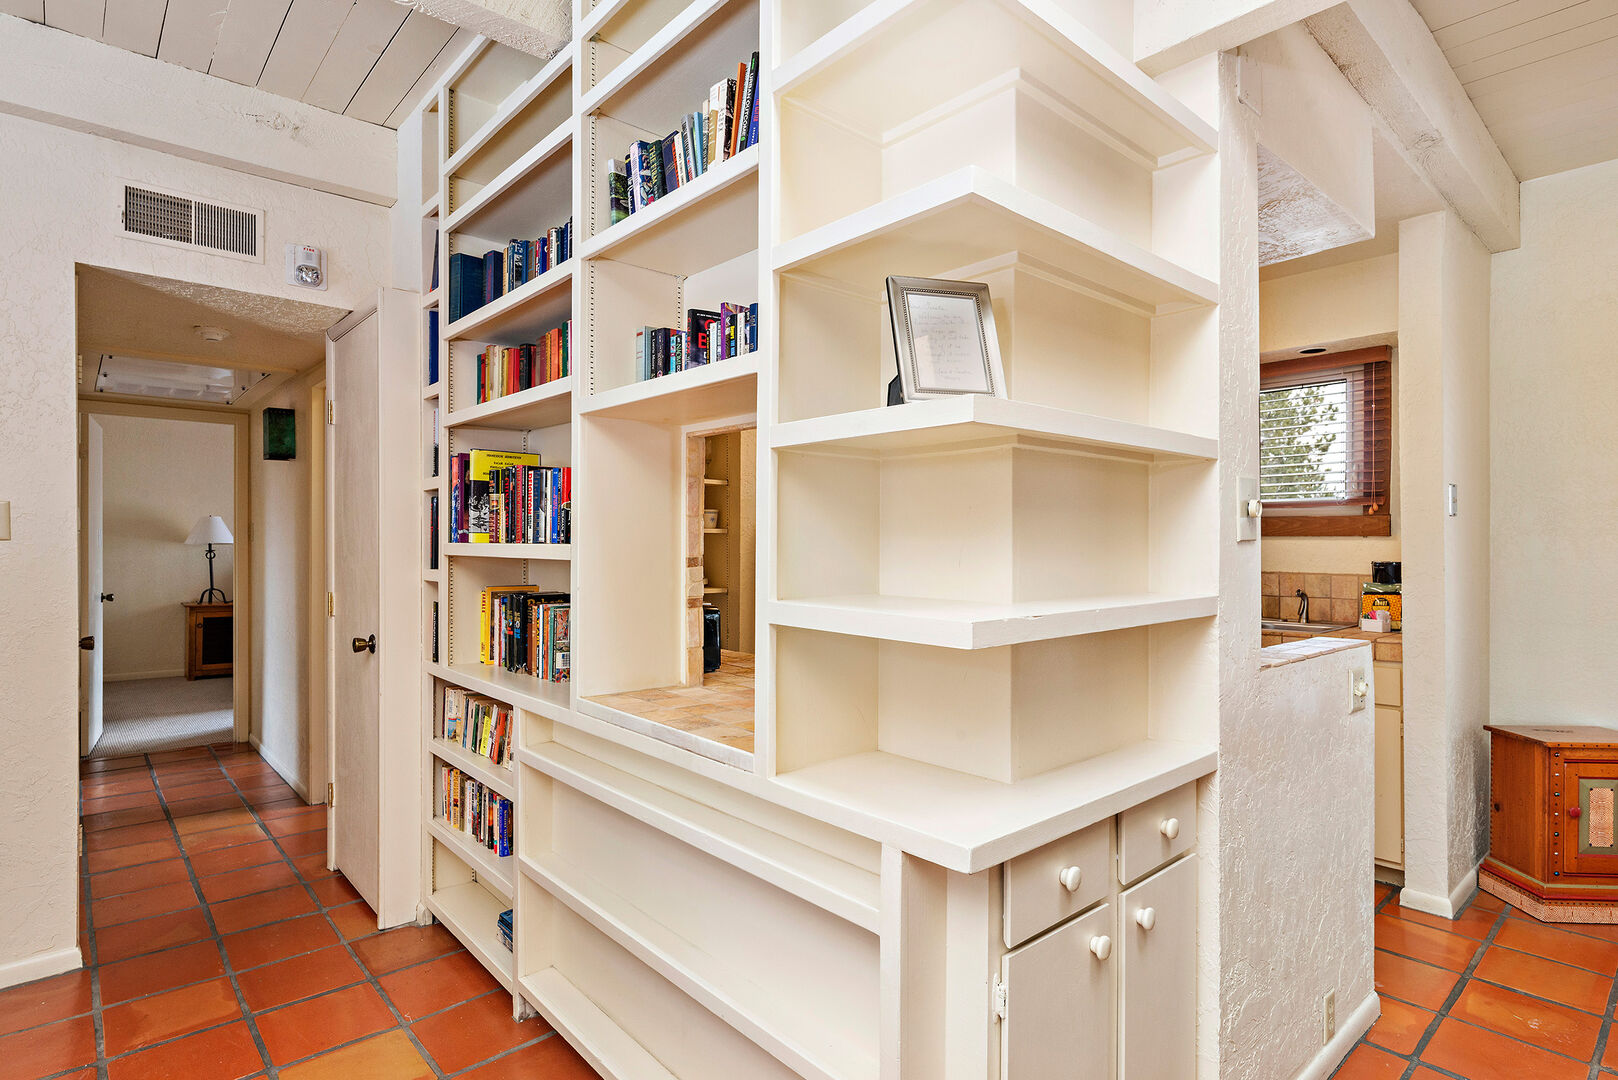 Book Shelf / Window to Kitchen / Hallway